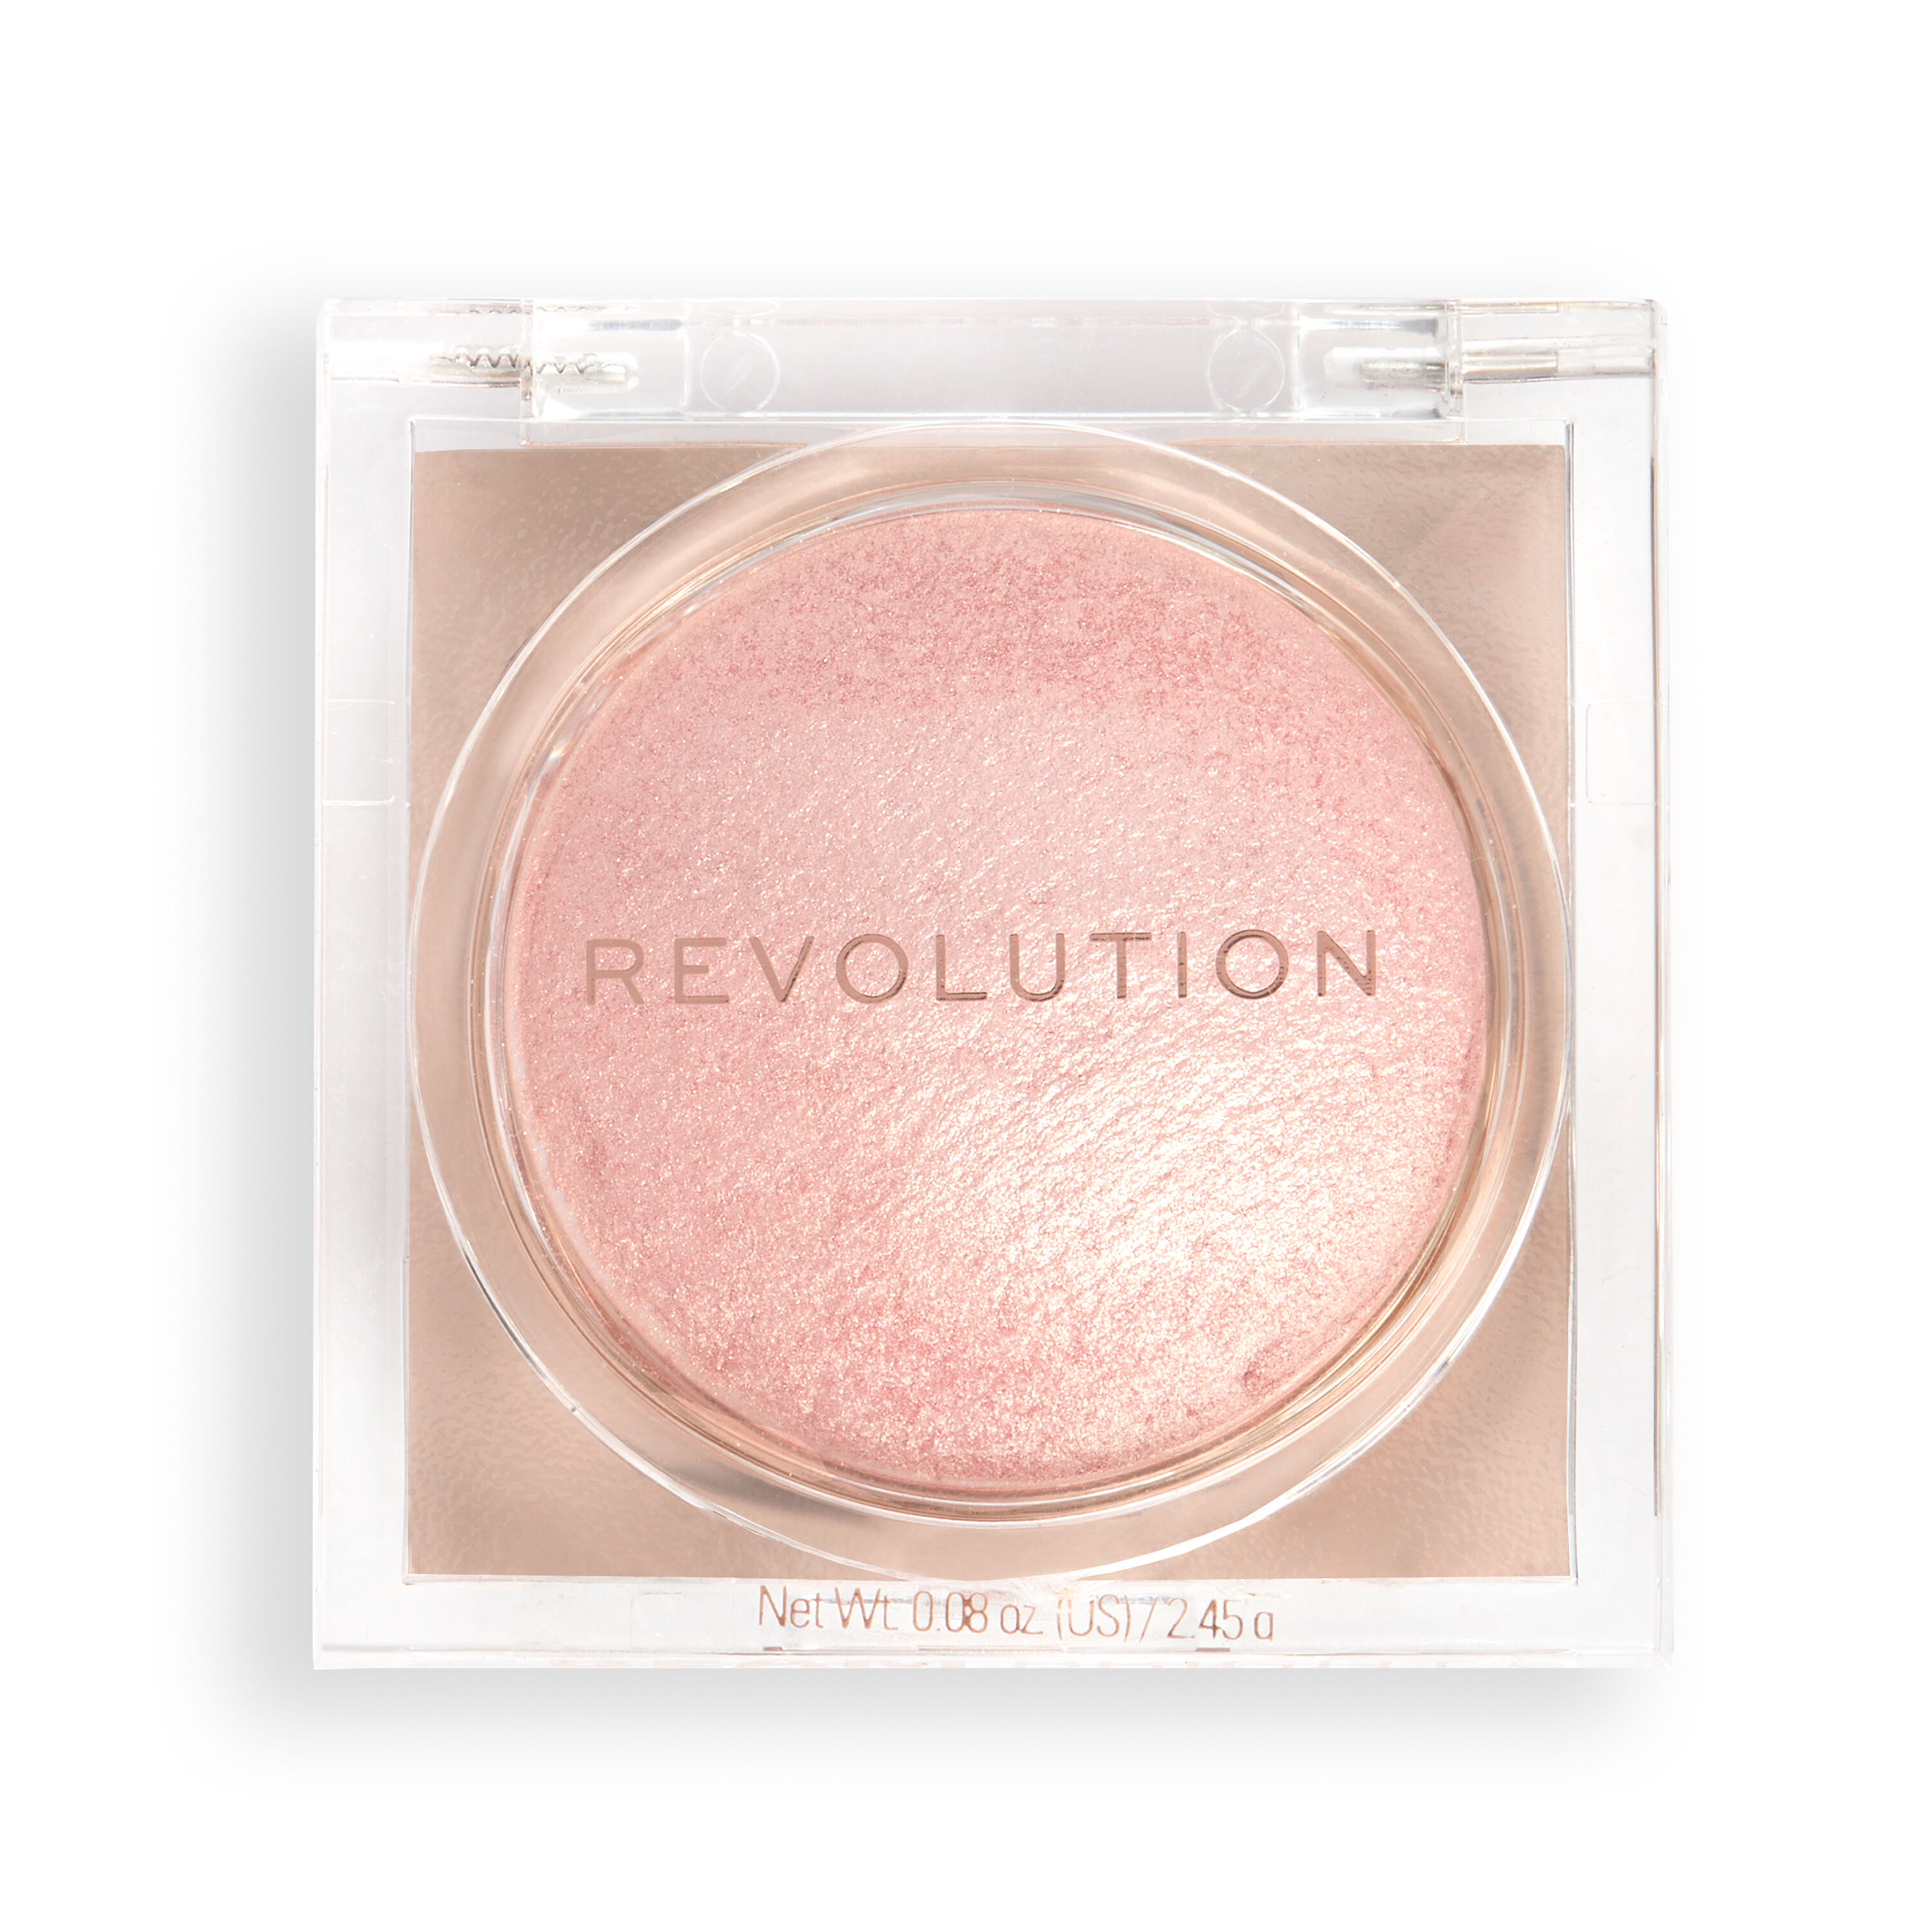 Хайлайтер Makeup Revolution Powder Highlighter Beam Bright Pink Seduction запечённый хайлайтер для космического сияния оттенок pink love 5389456